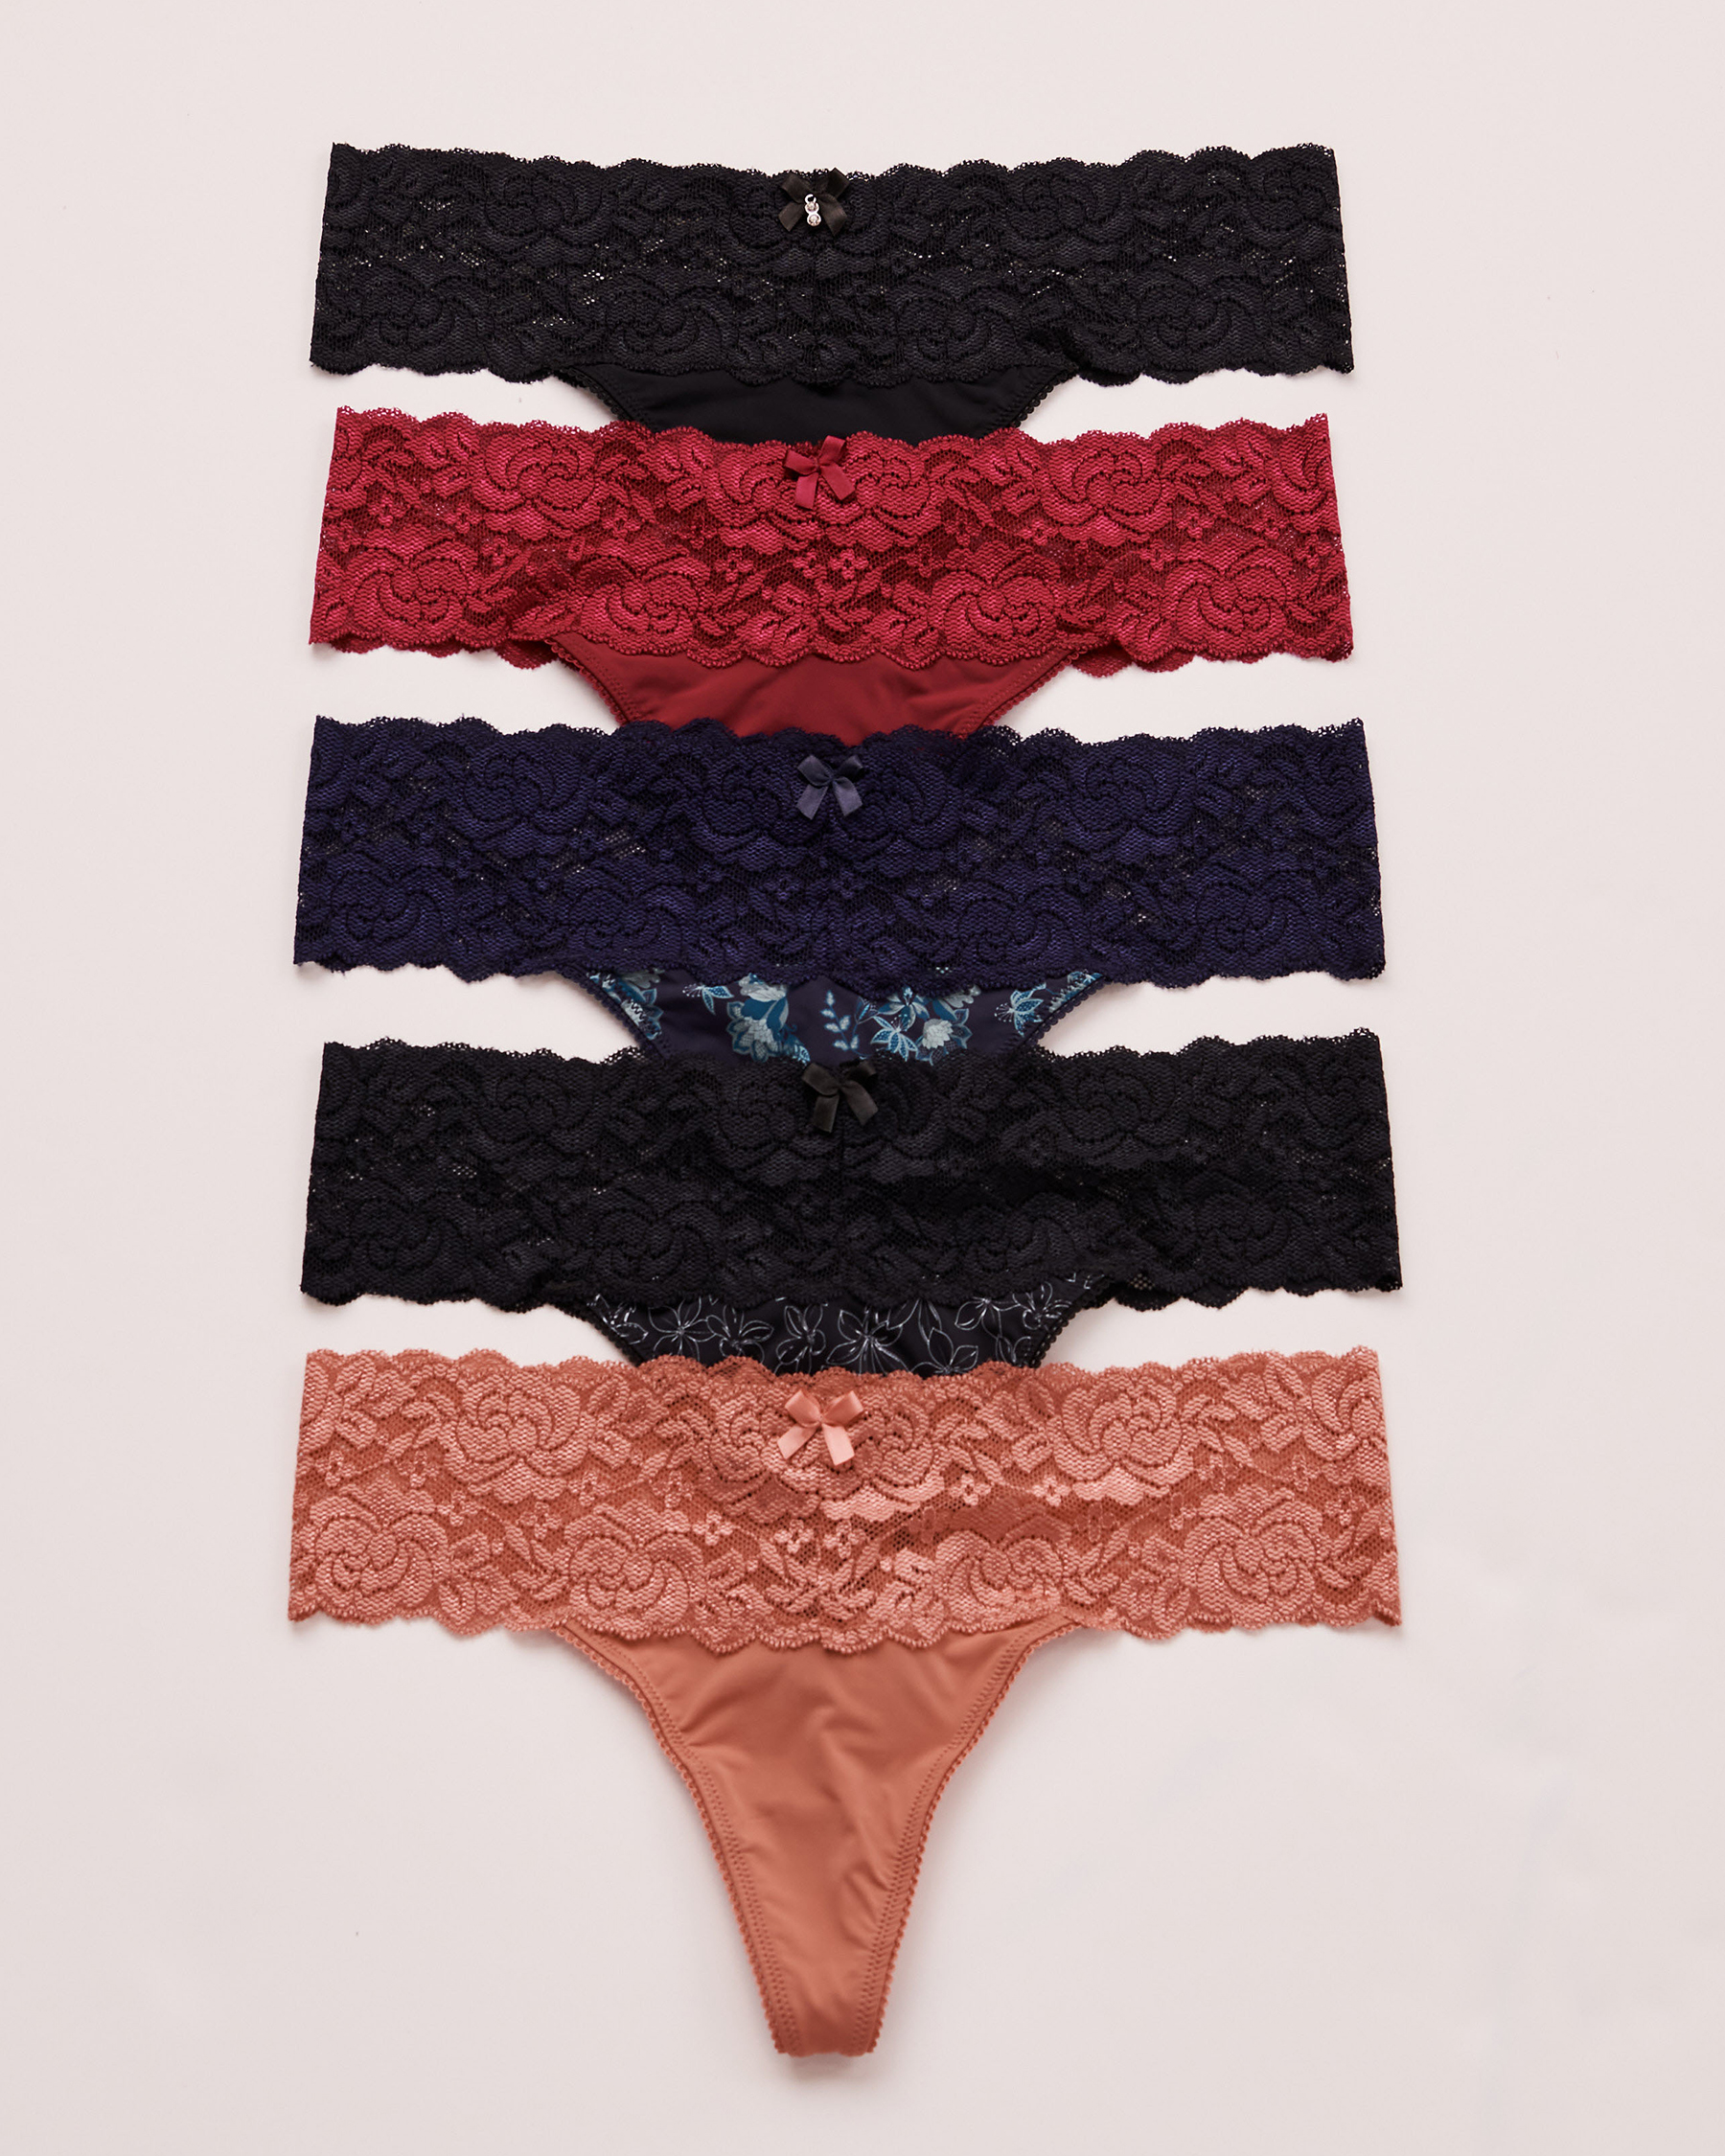 LA VIE EN ROSE 5-Pack Microfiber and Wide Lace Band Thong Panty Multicolor 20200236-5P - View1